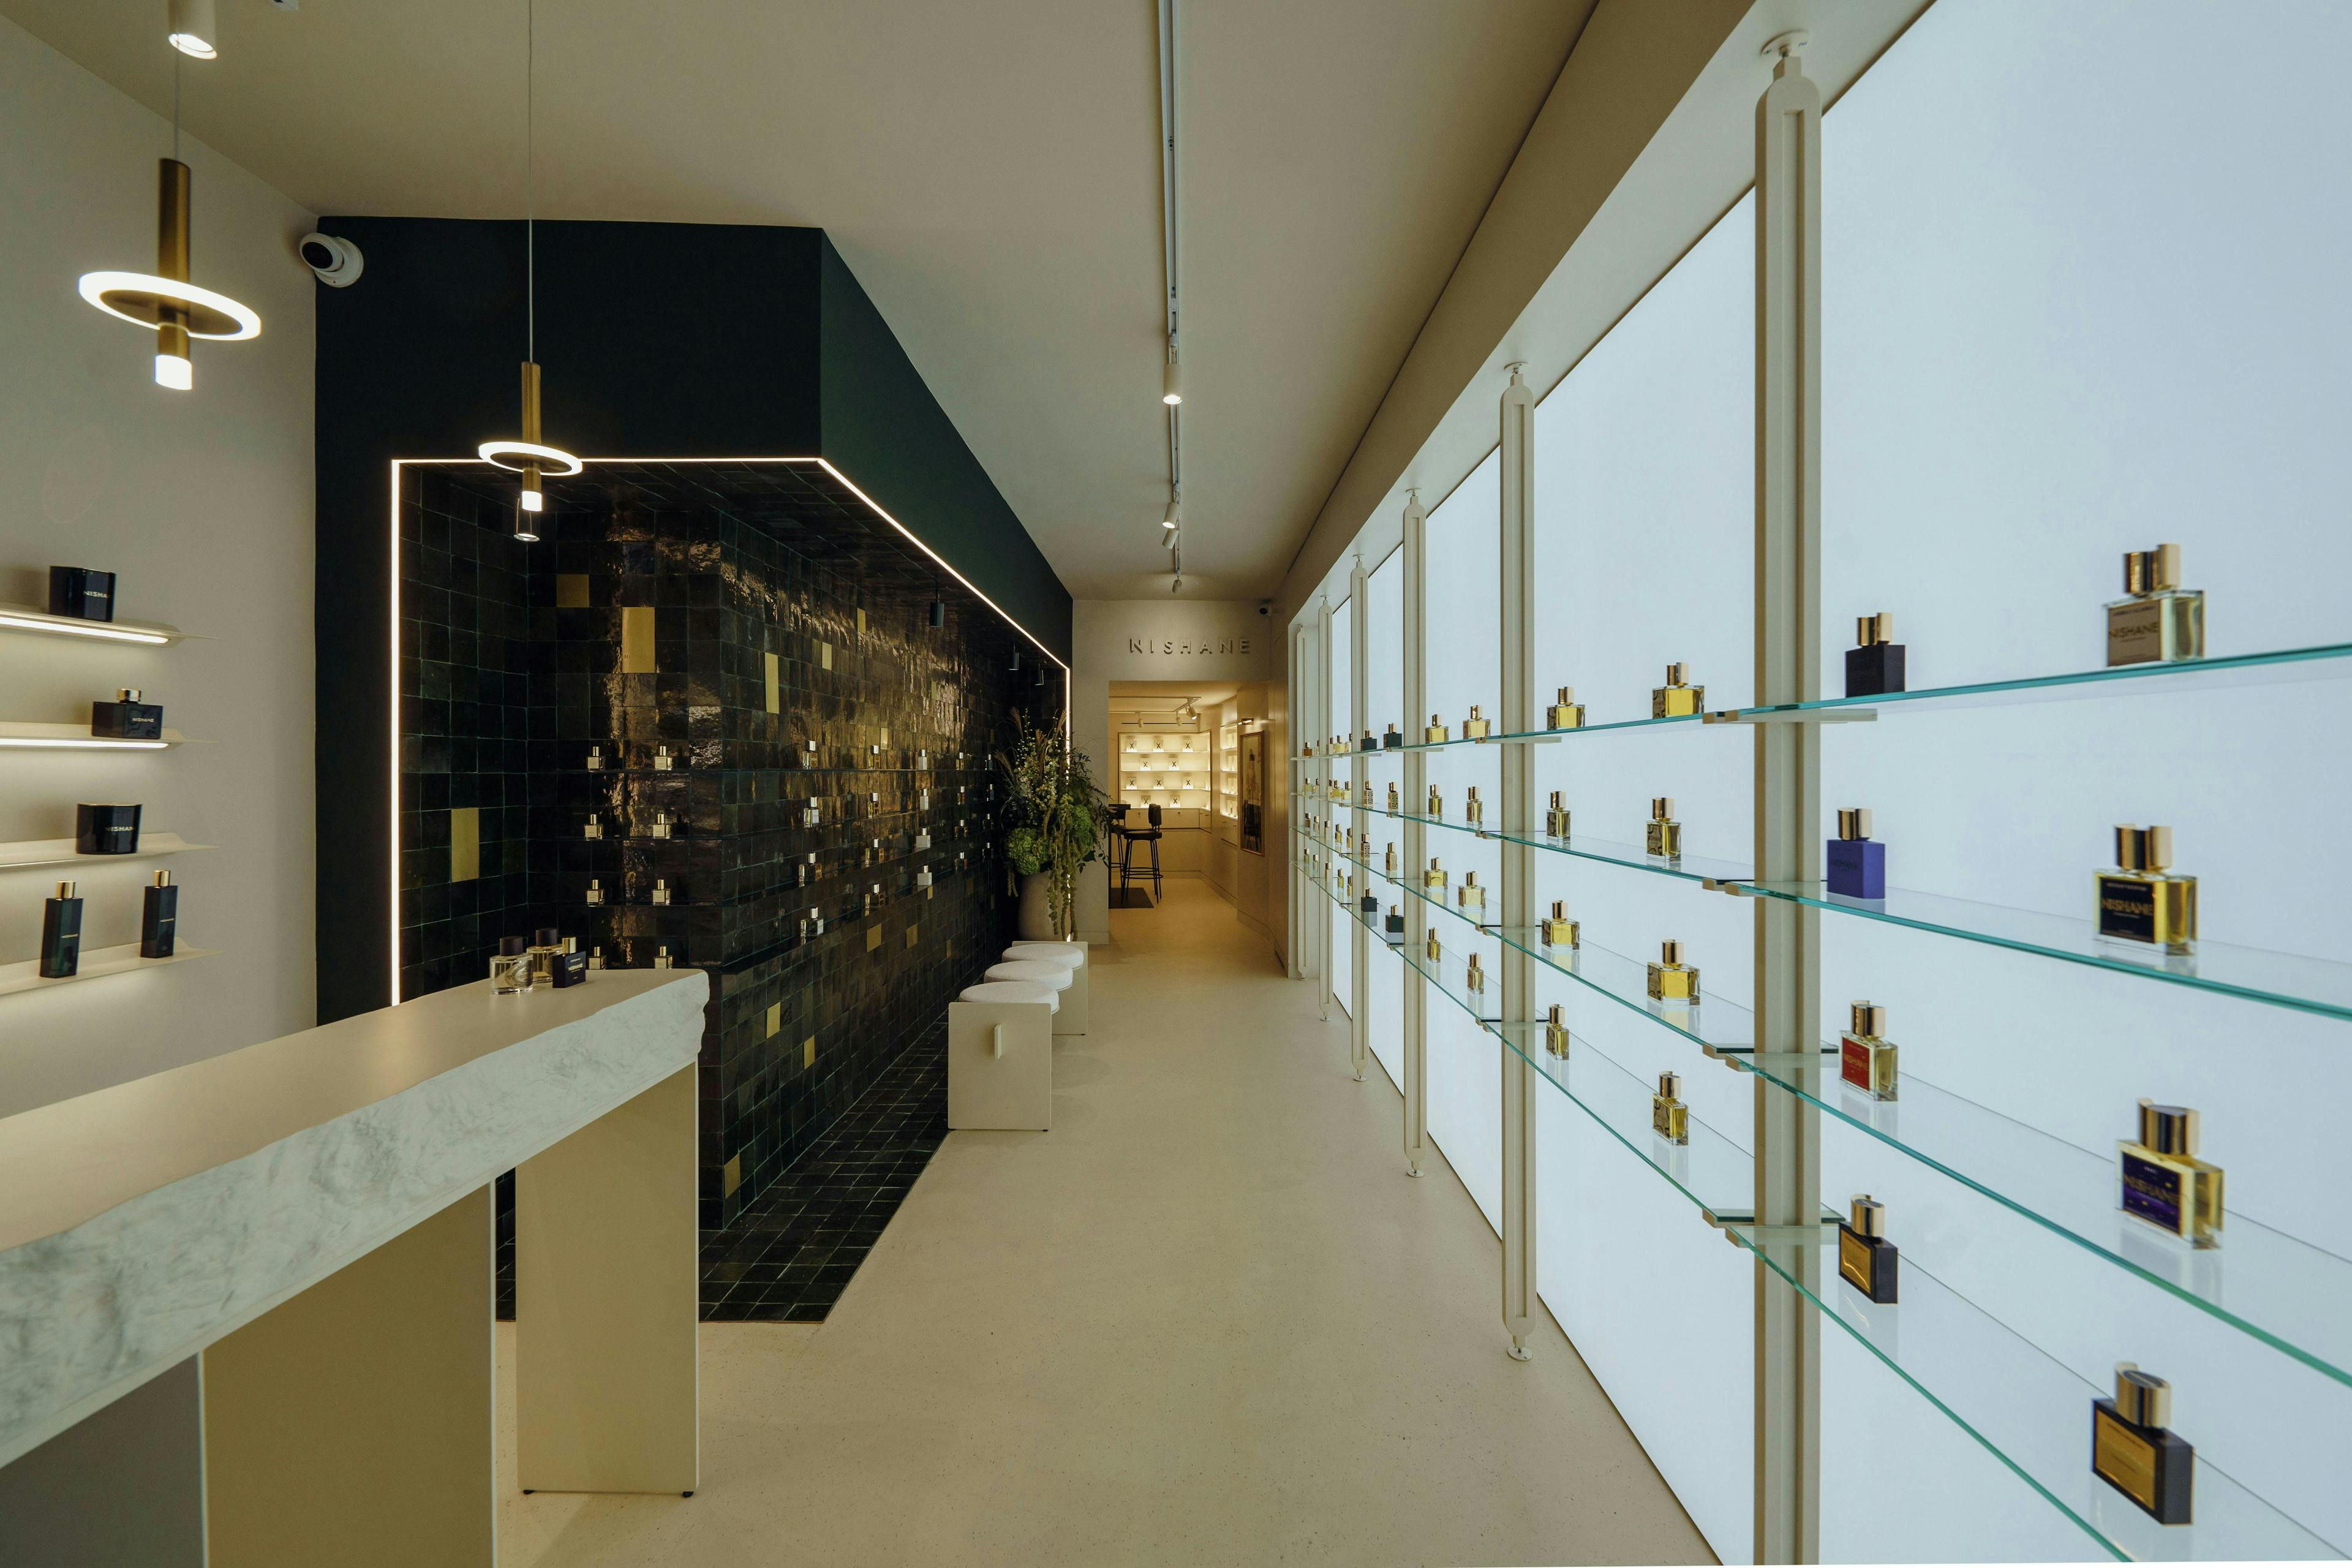 shelf lamp indoors interior design shop plant bottle cosmetics perfume